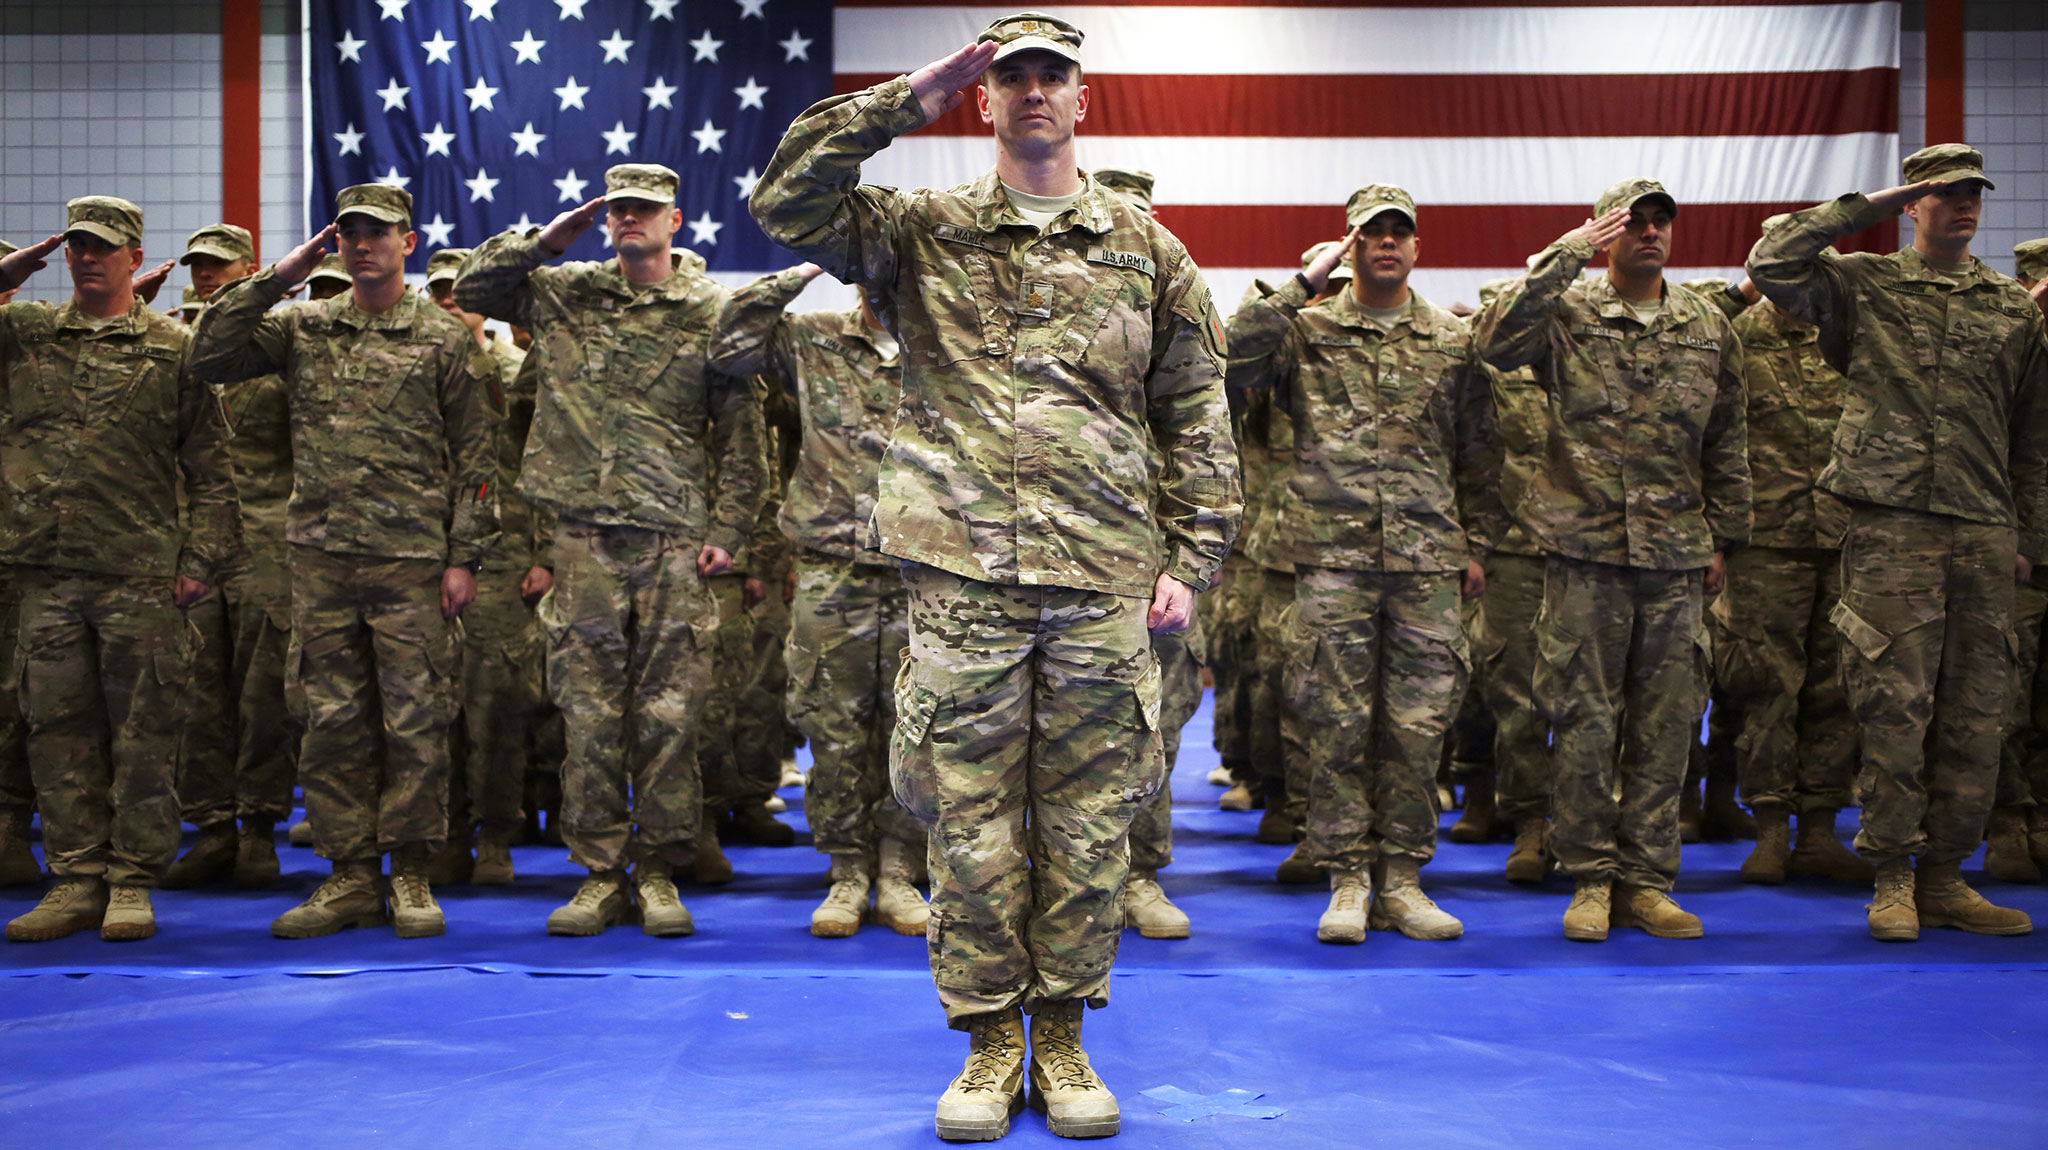 O αμερικανικός Στρατός ζητά από τους ανεμβολίαστους να γυρίσουν πίσω: «Κάναμε λάθος και σας χρειαζόμαστε»